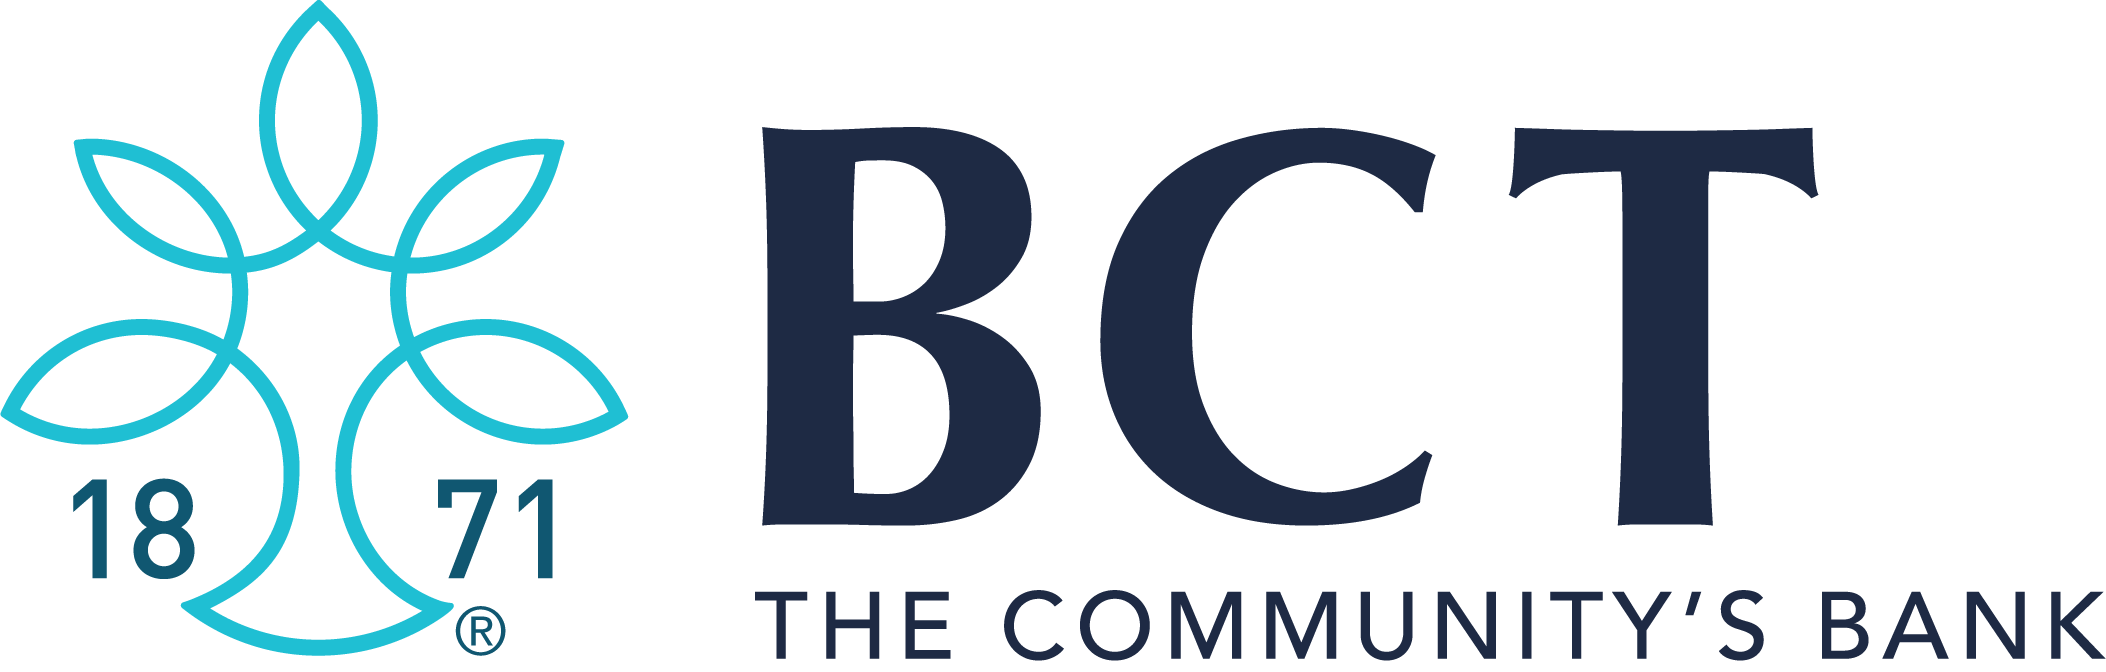 BCTLogo_TheCommunitysBank-color-trademark